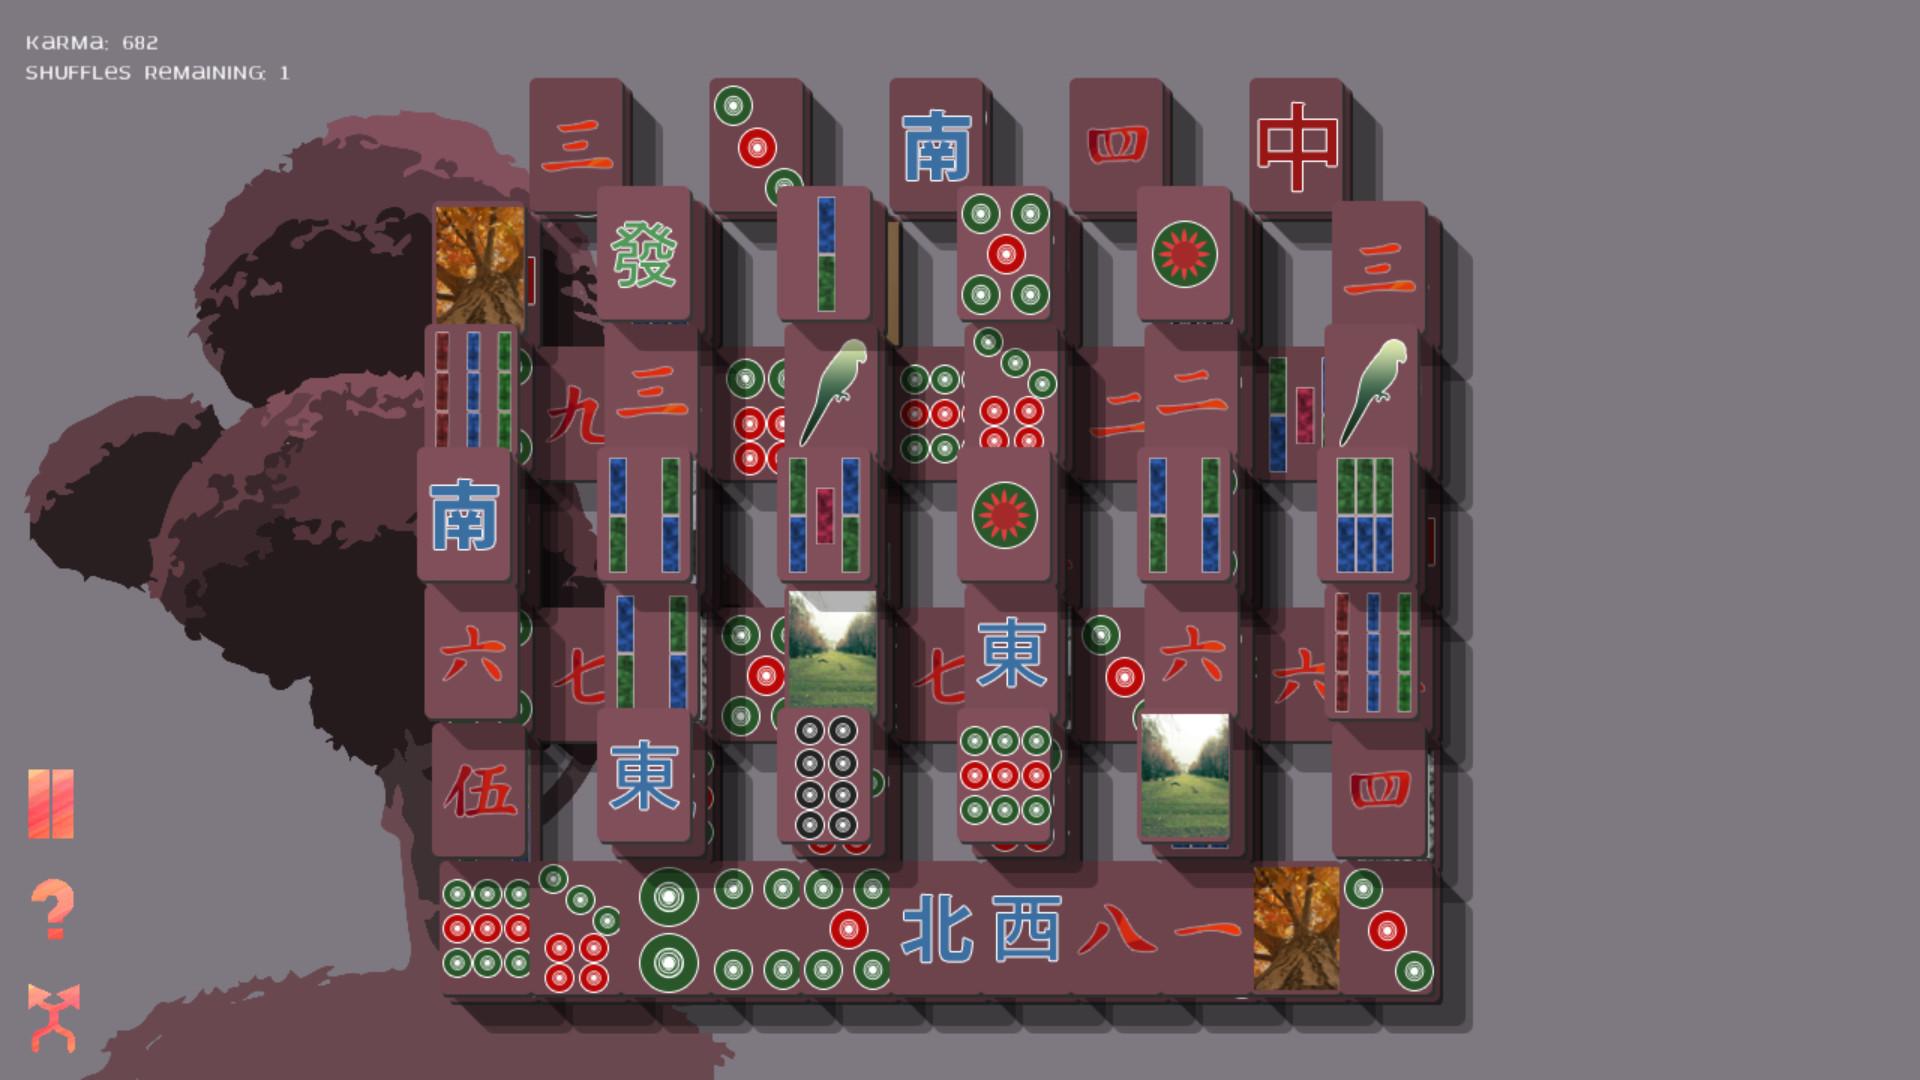 Screenshot №6 from game That's Mahjong!